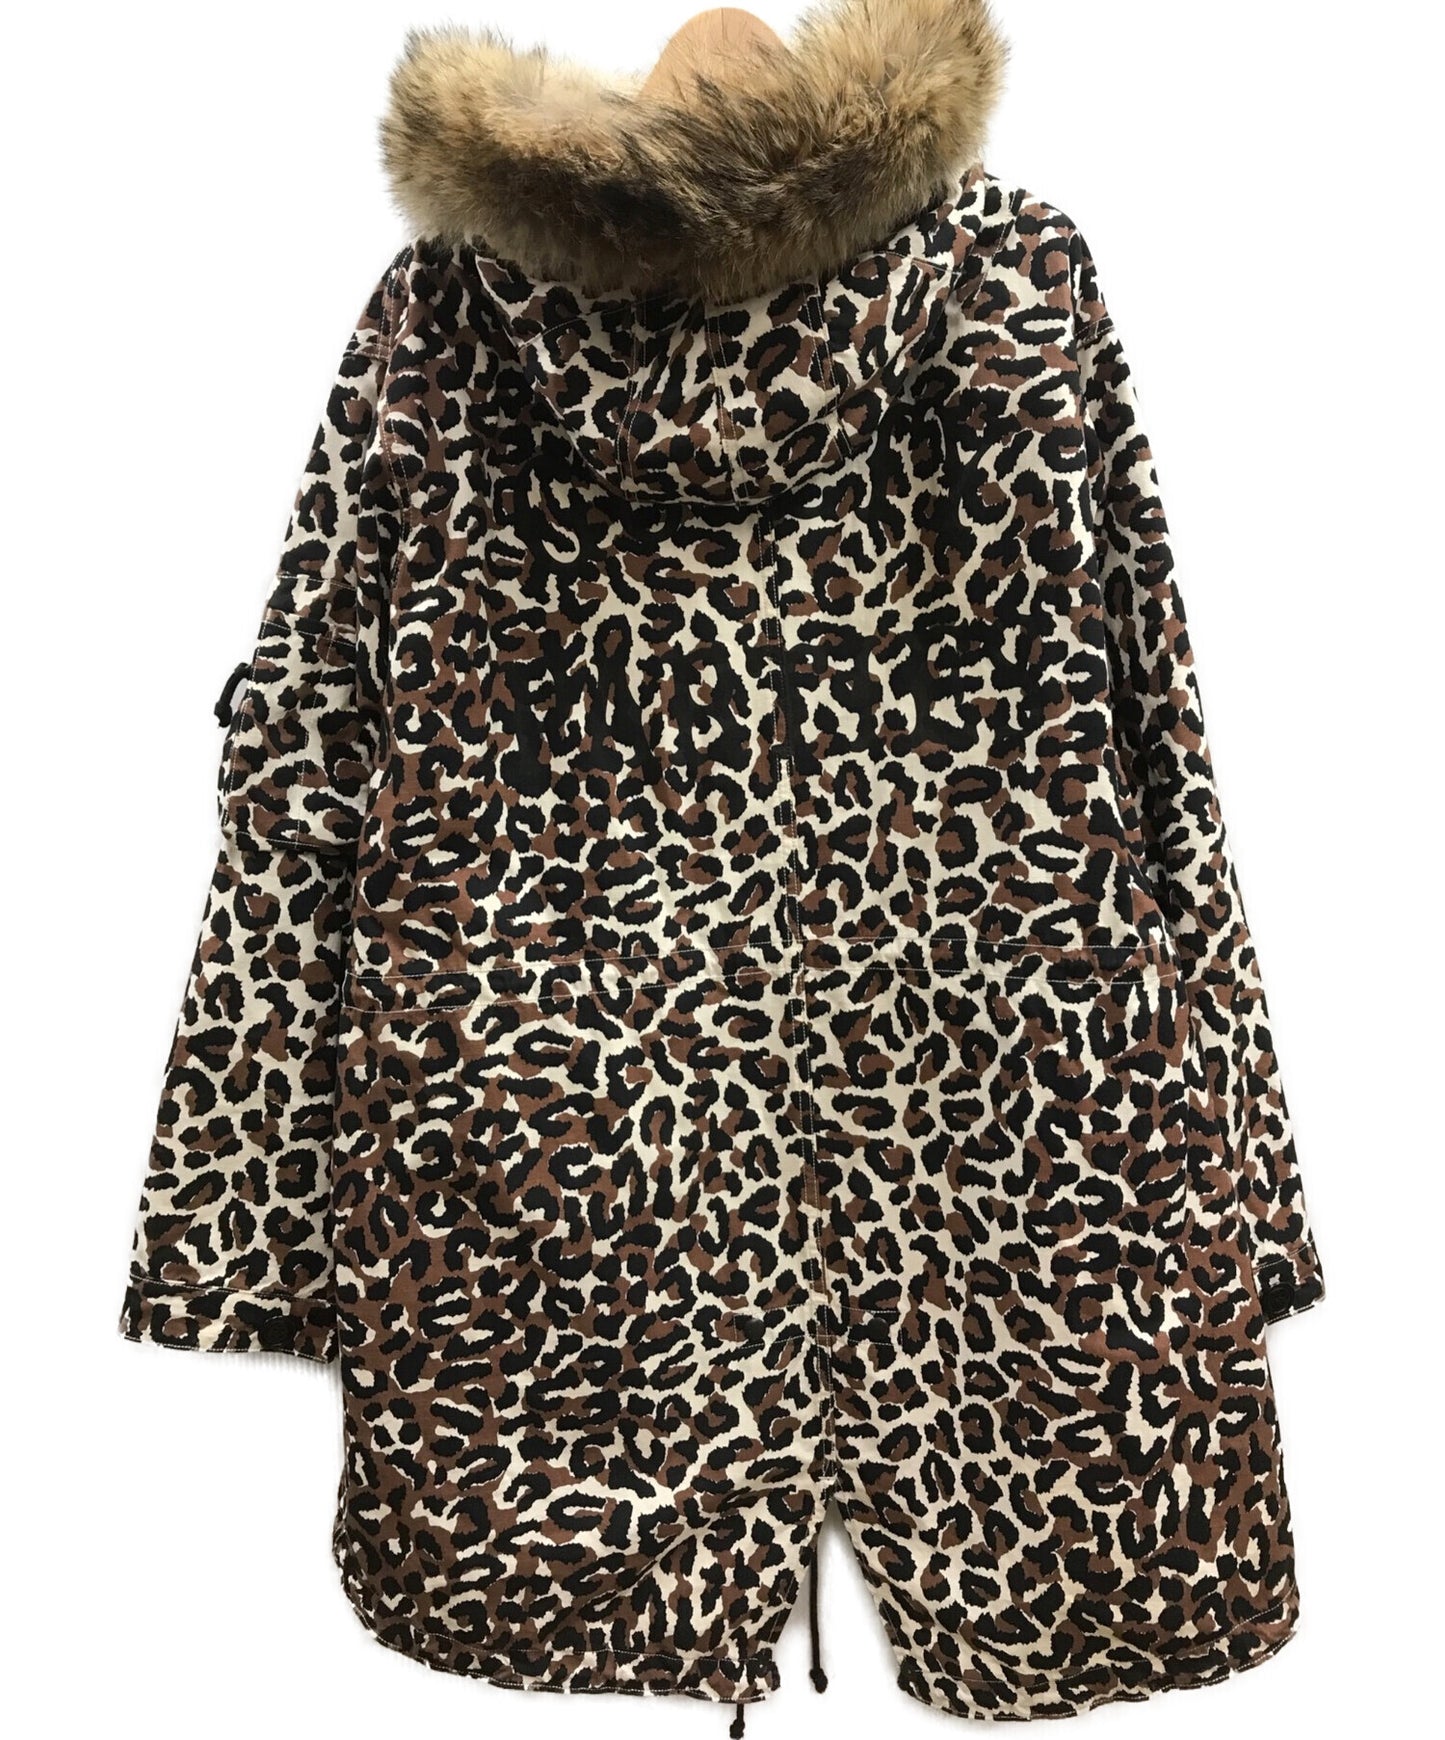 Wacko Maria M-1948 Leopard Mod Coat M-48/Hooded Coat/